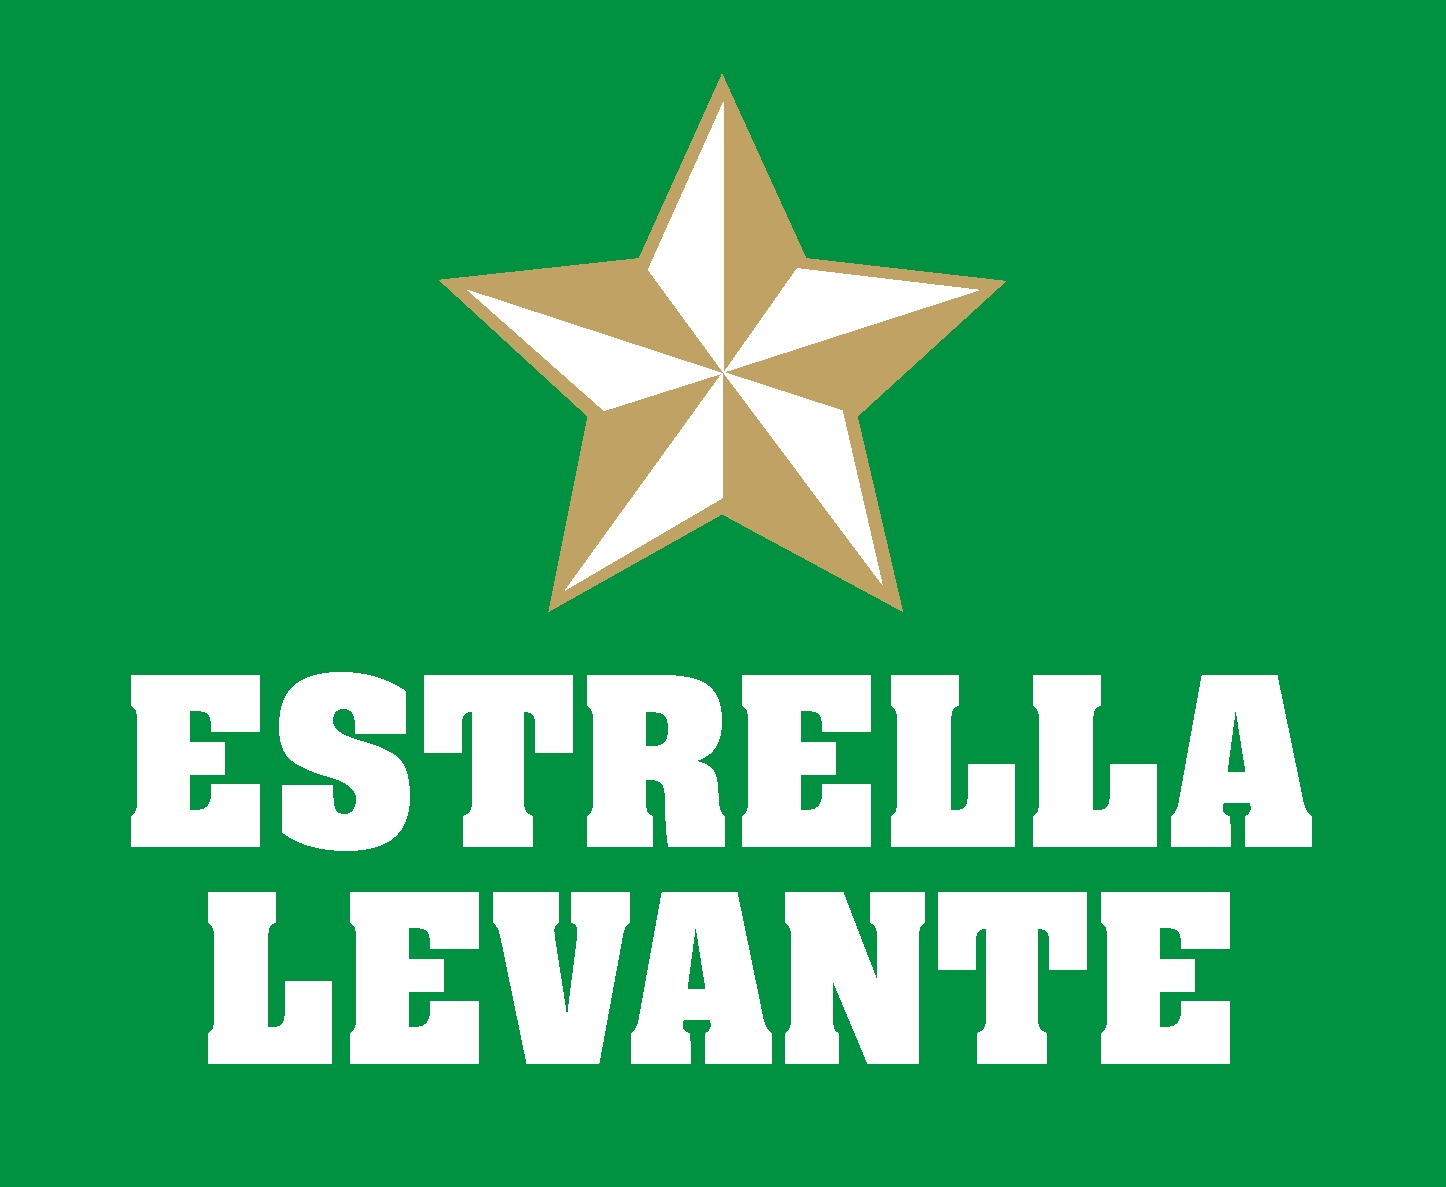 Estrella Levante